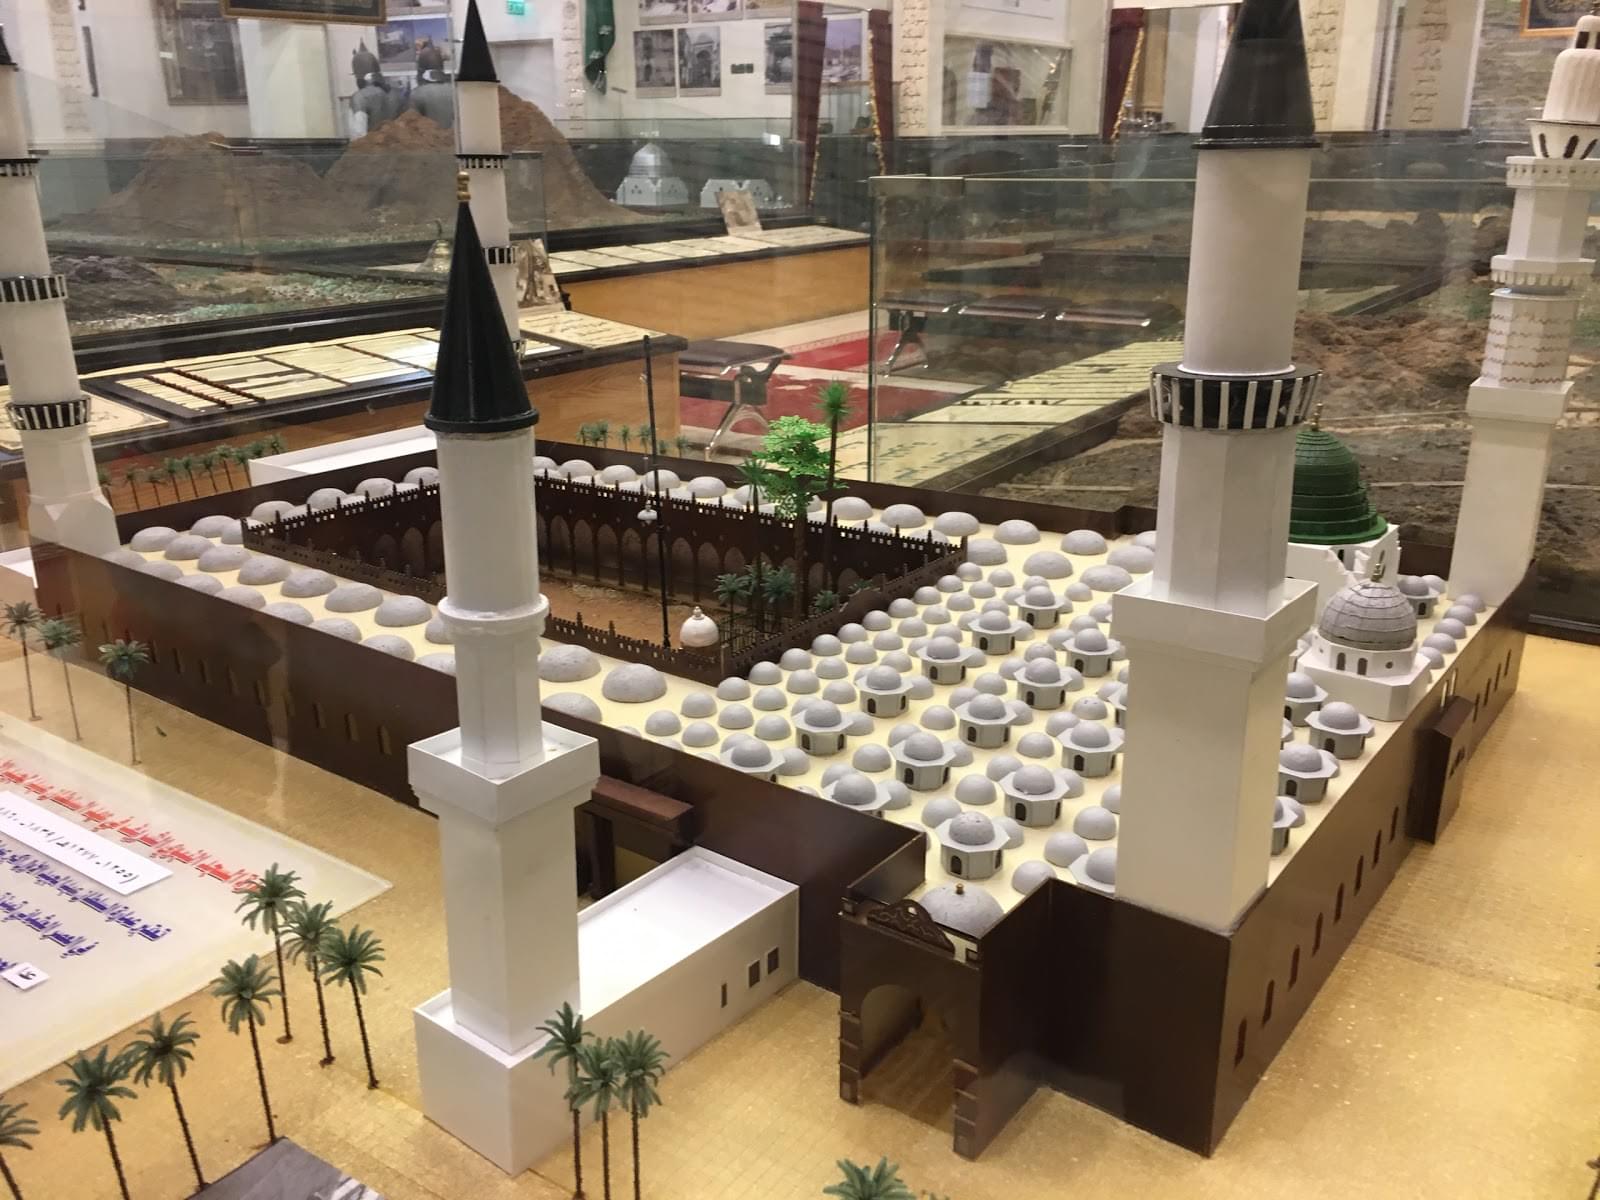 Dar Al Madinah Museum Overview